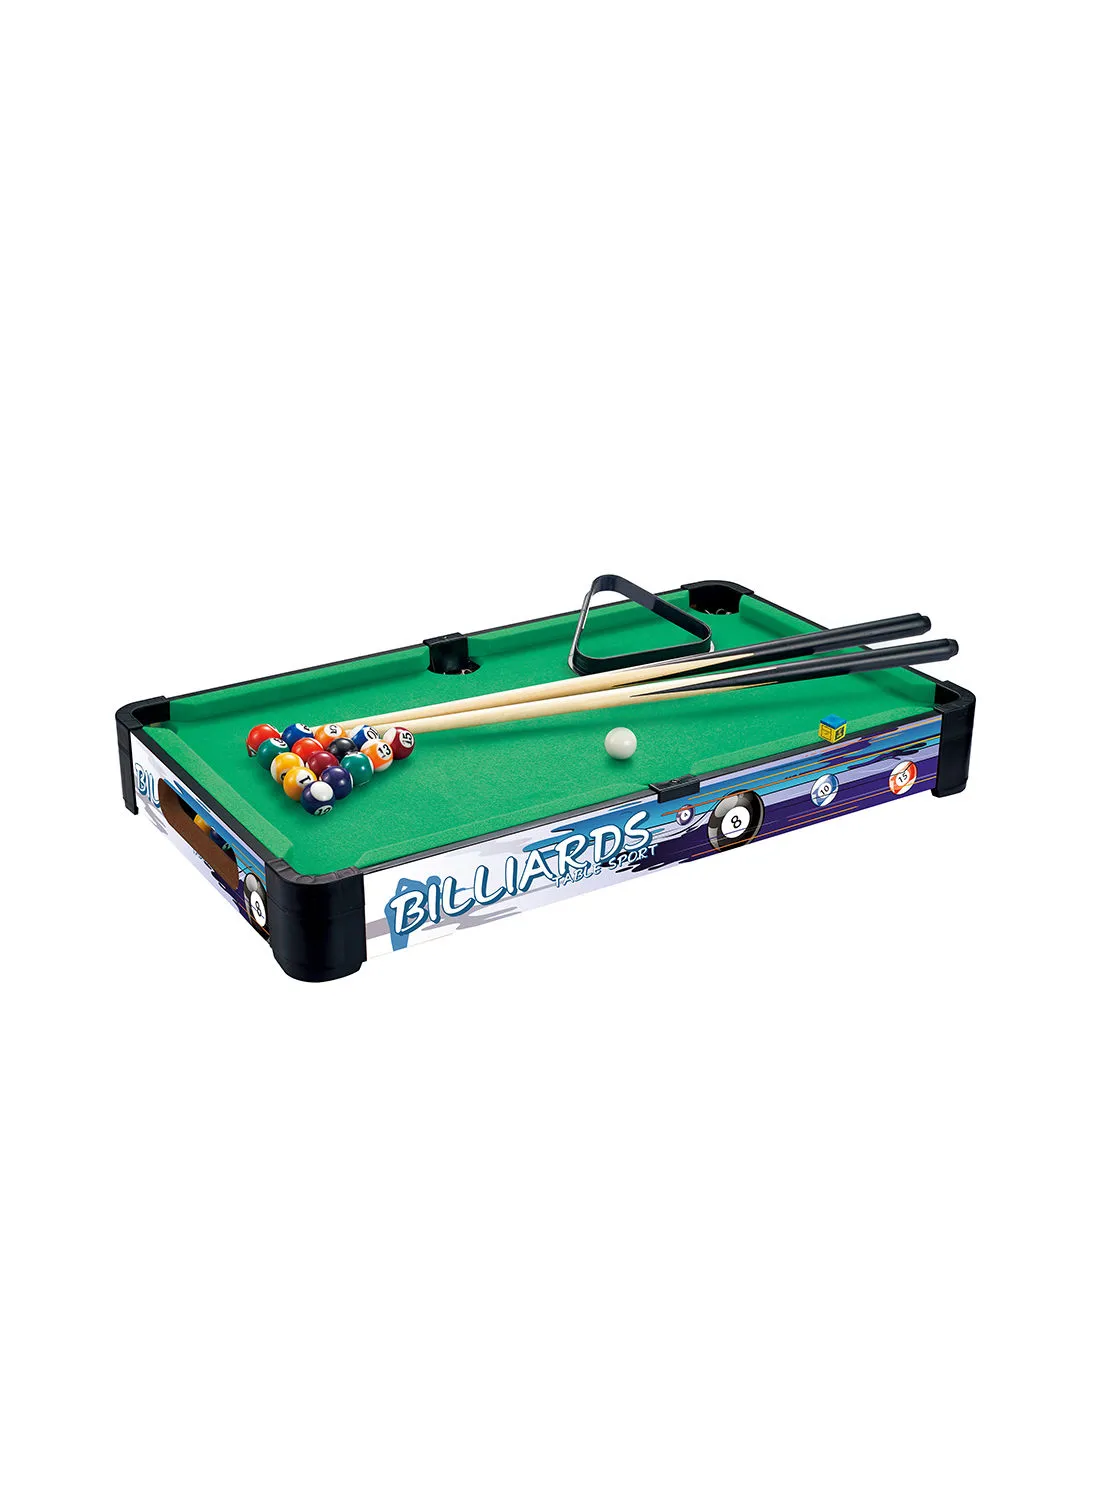 XIANGJUN Billiards Pool Table Game Set 61 x 39.5 x 8.7cm